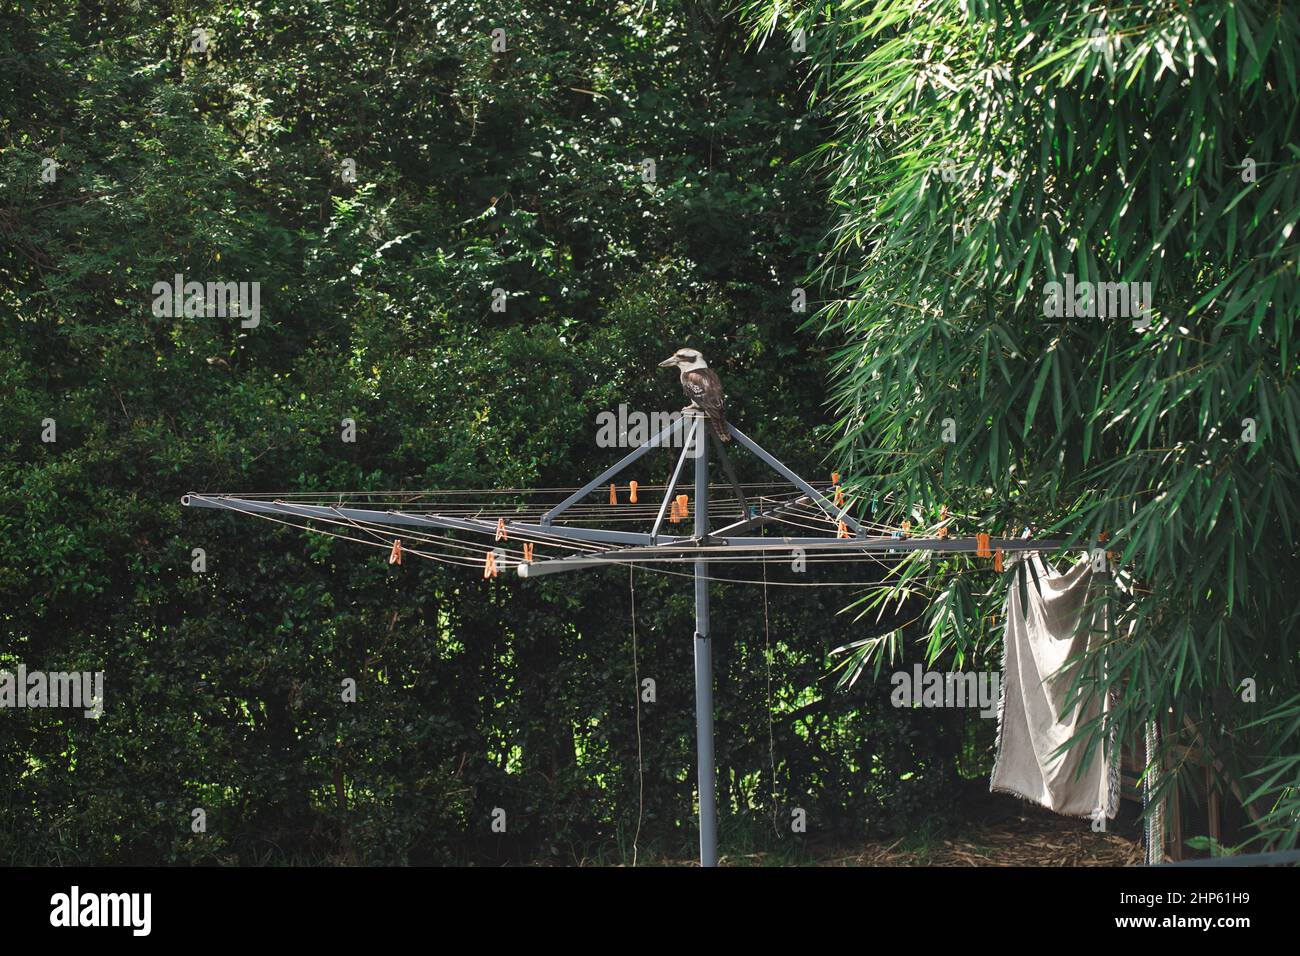 Kookaburra sitting on clothes line in Australian backyard Stock Photo